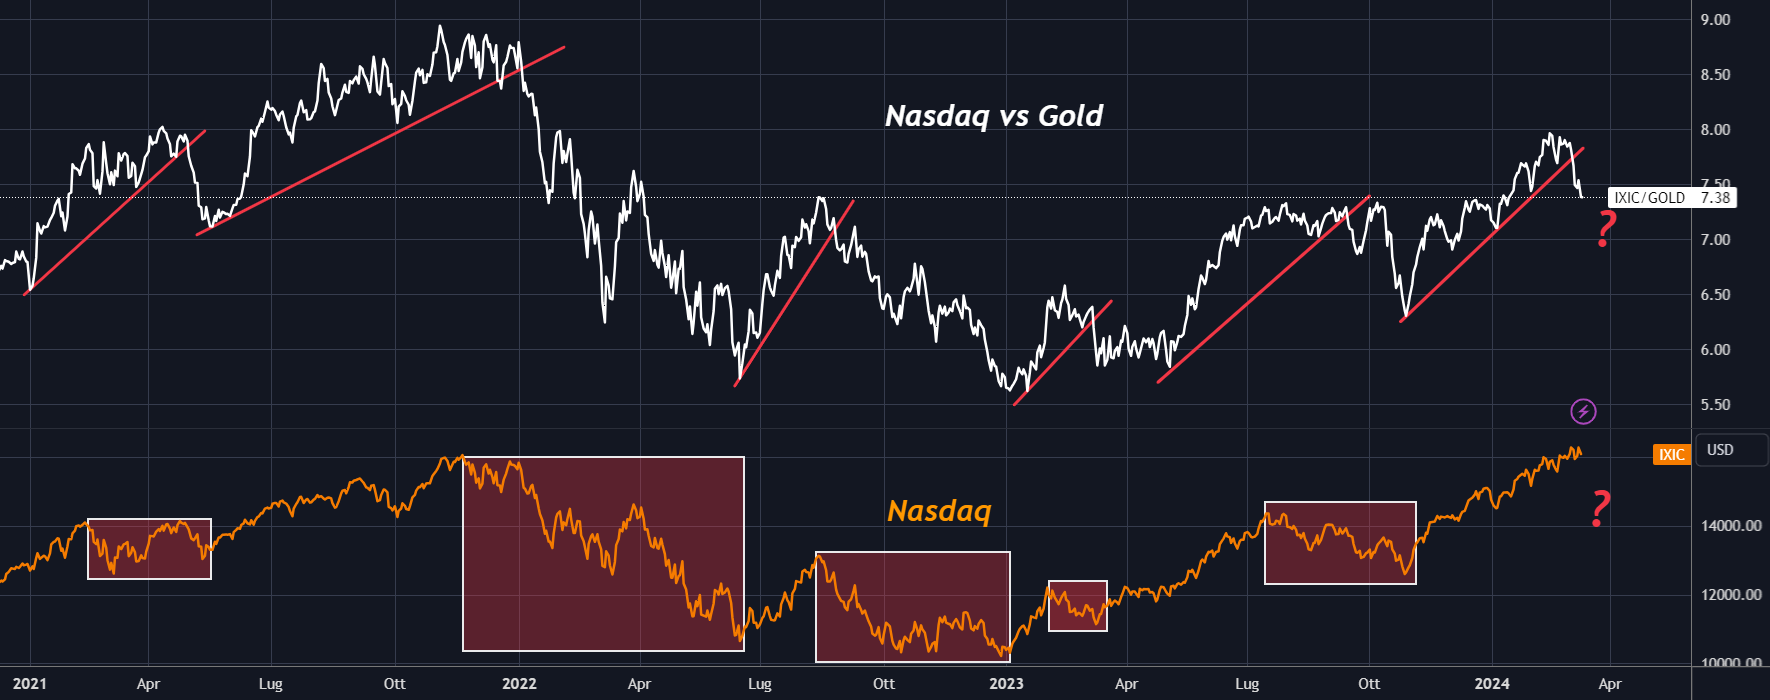 Nasdaq vs Gold